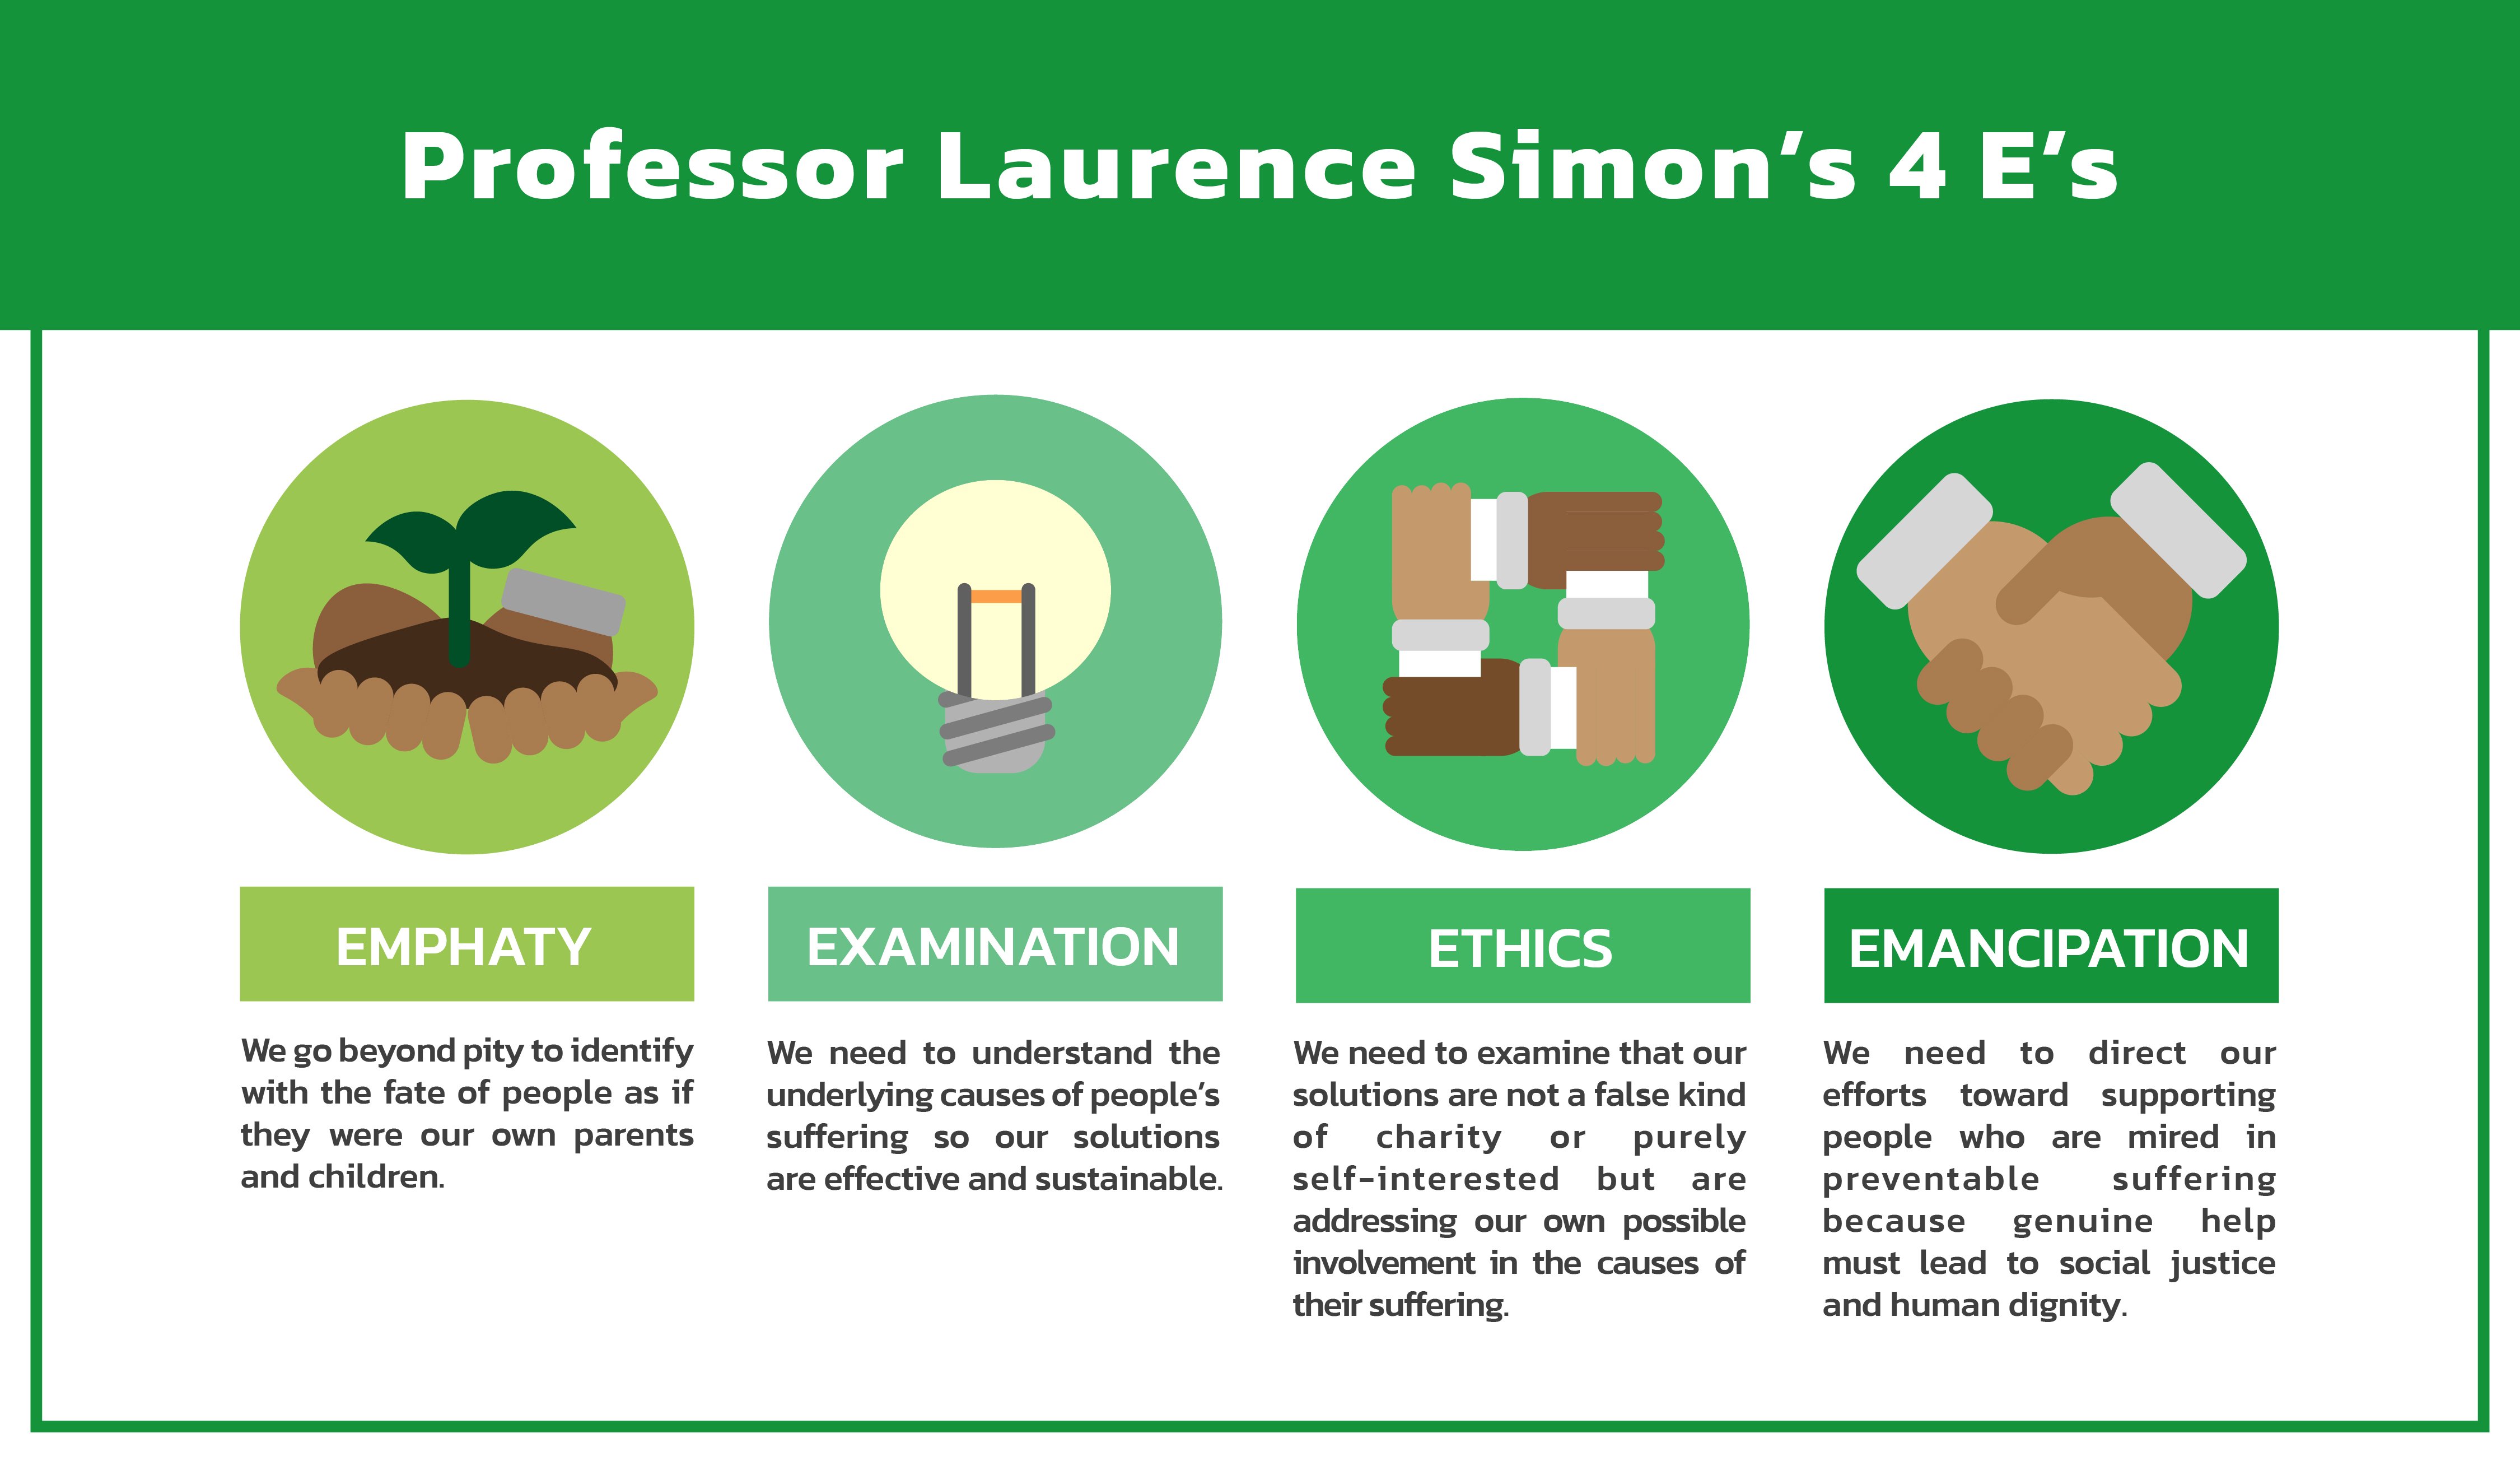 Professor Laurence Simon’s 4 E’s_Professor Laurence Simon’s 4 E’s